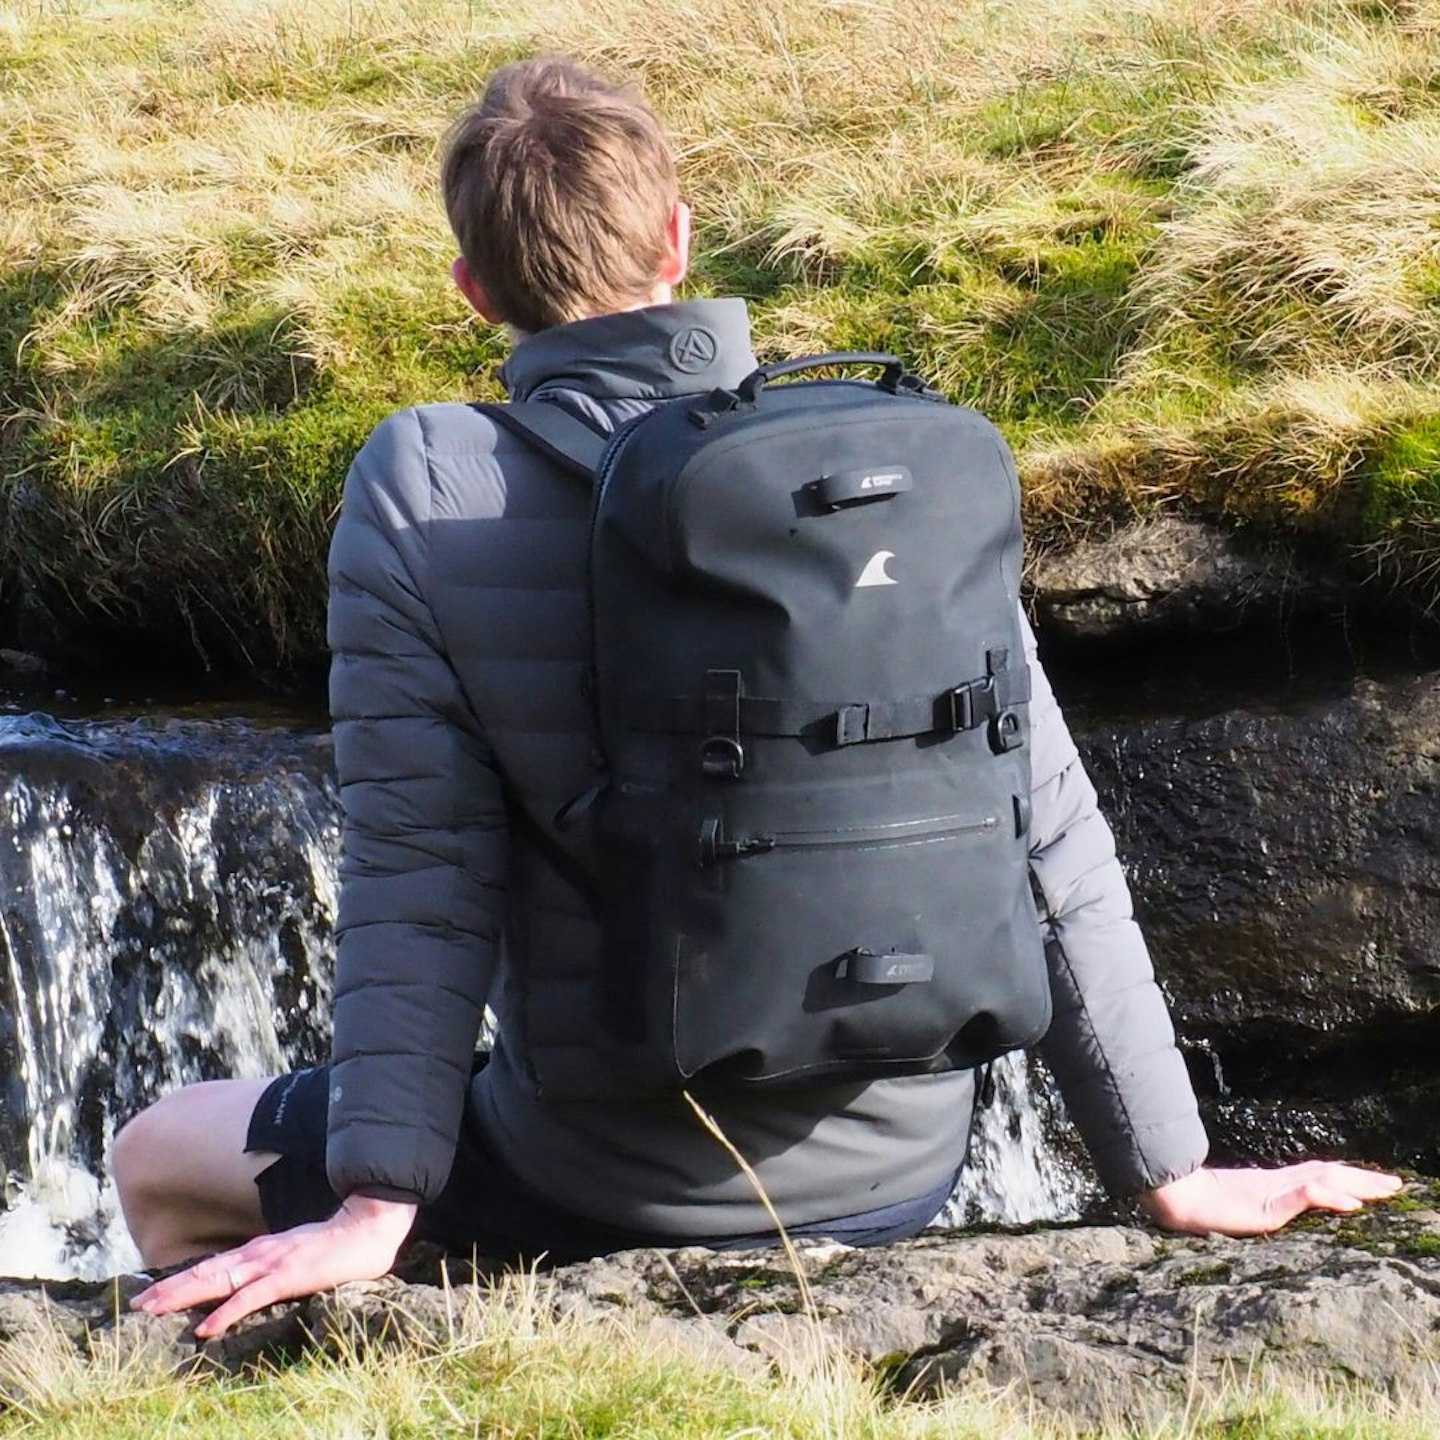 LFTO tester wearing Breakwater Supply Fogland Waterproof Backpack